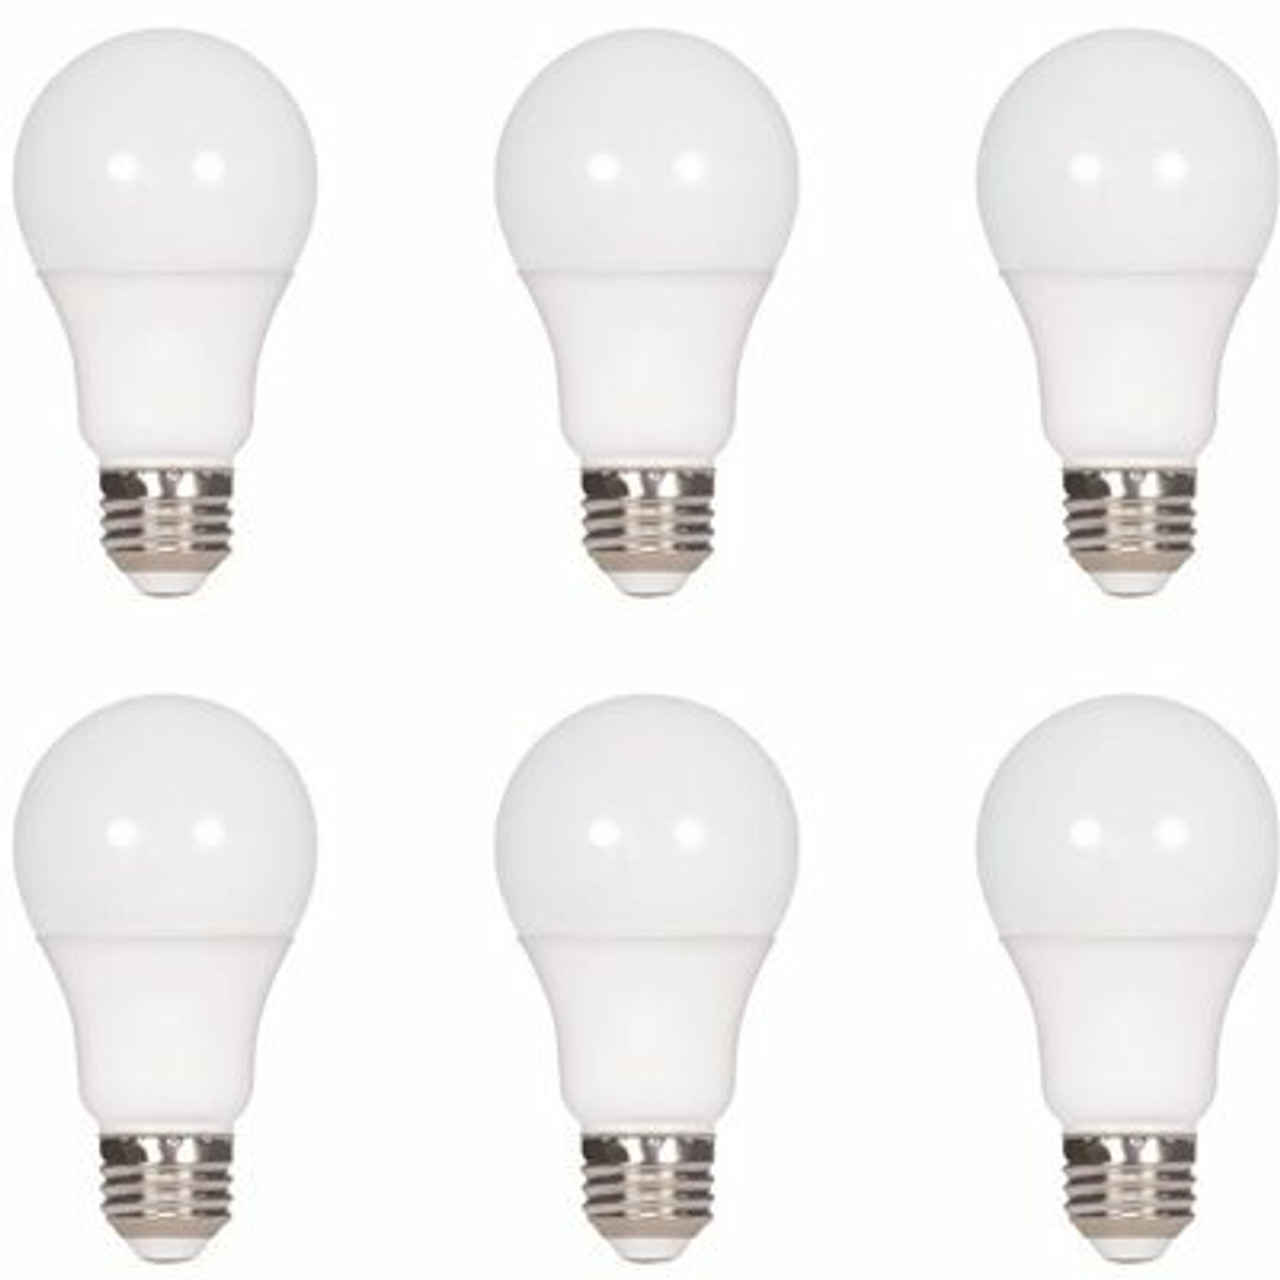 Satco 75-Watt Equivalent A19 Medium Base Led Light Bulb, Cool White (6-Pack)